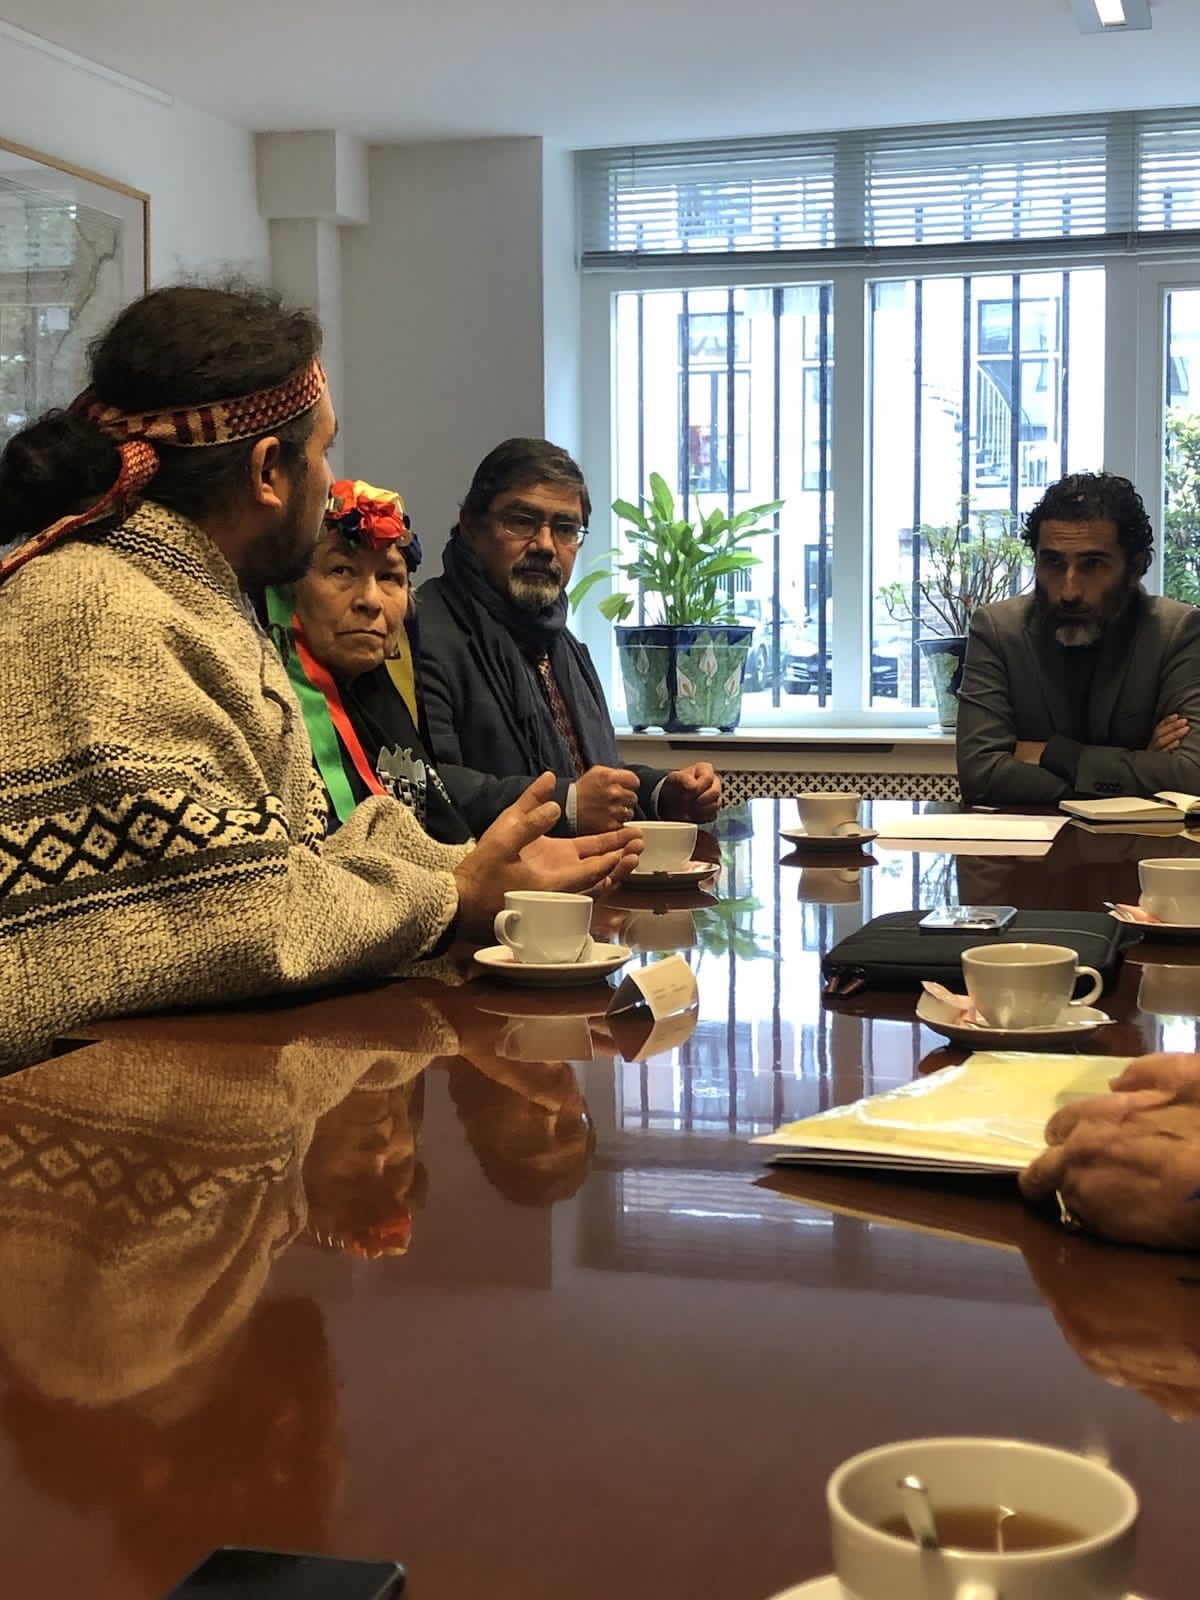 Dirigentes mapuche piden arbitraje de juez Baltazar Garzón “ante usurpación histórica” de territorios ancestrales